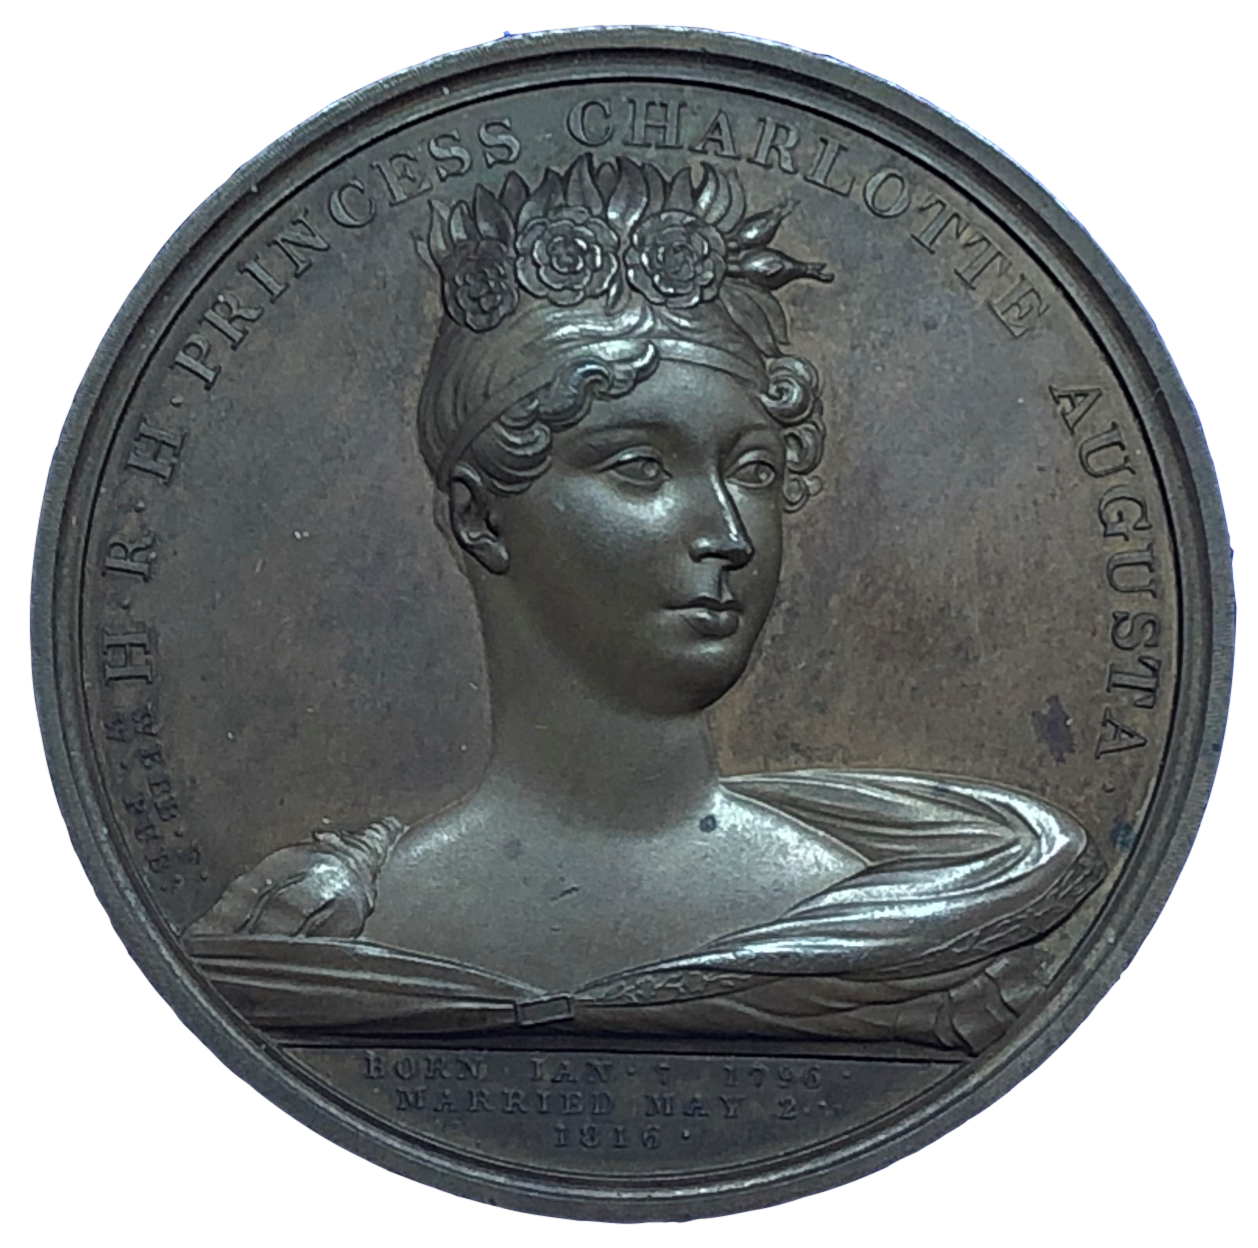 1817 Death of Princess Charlotte Augusta Historical Medallion by T Webb & G Mills Obverse